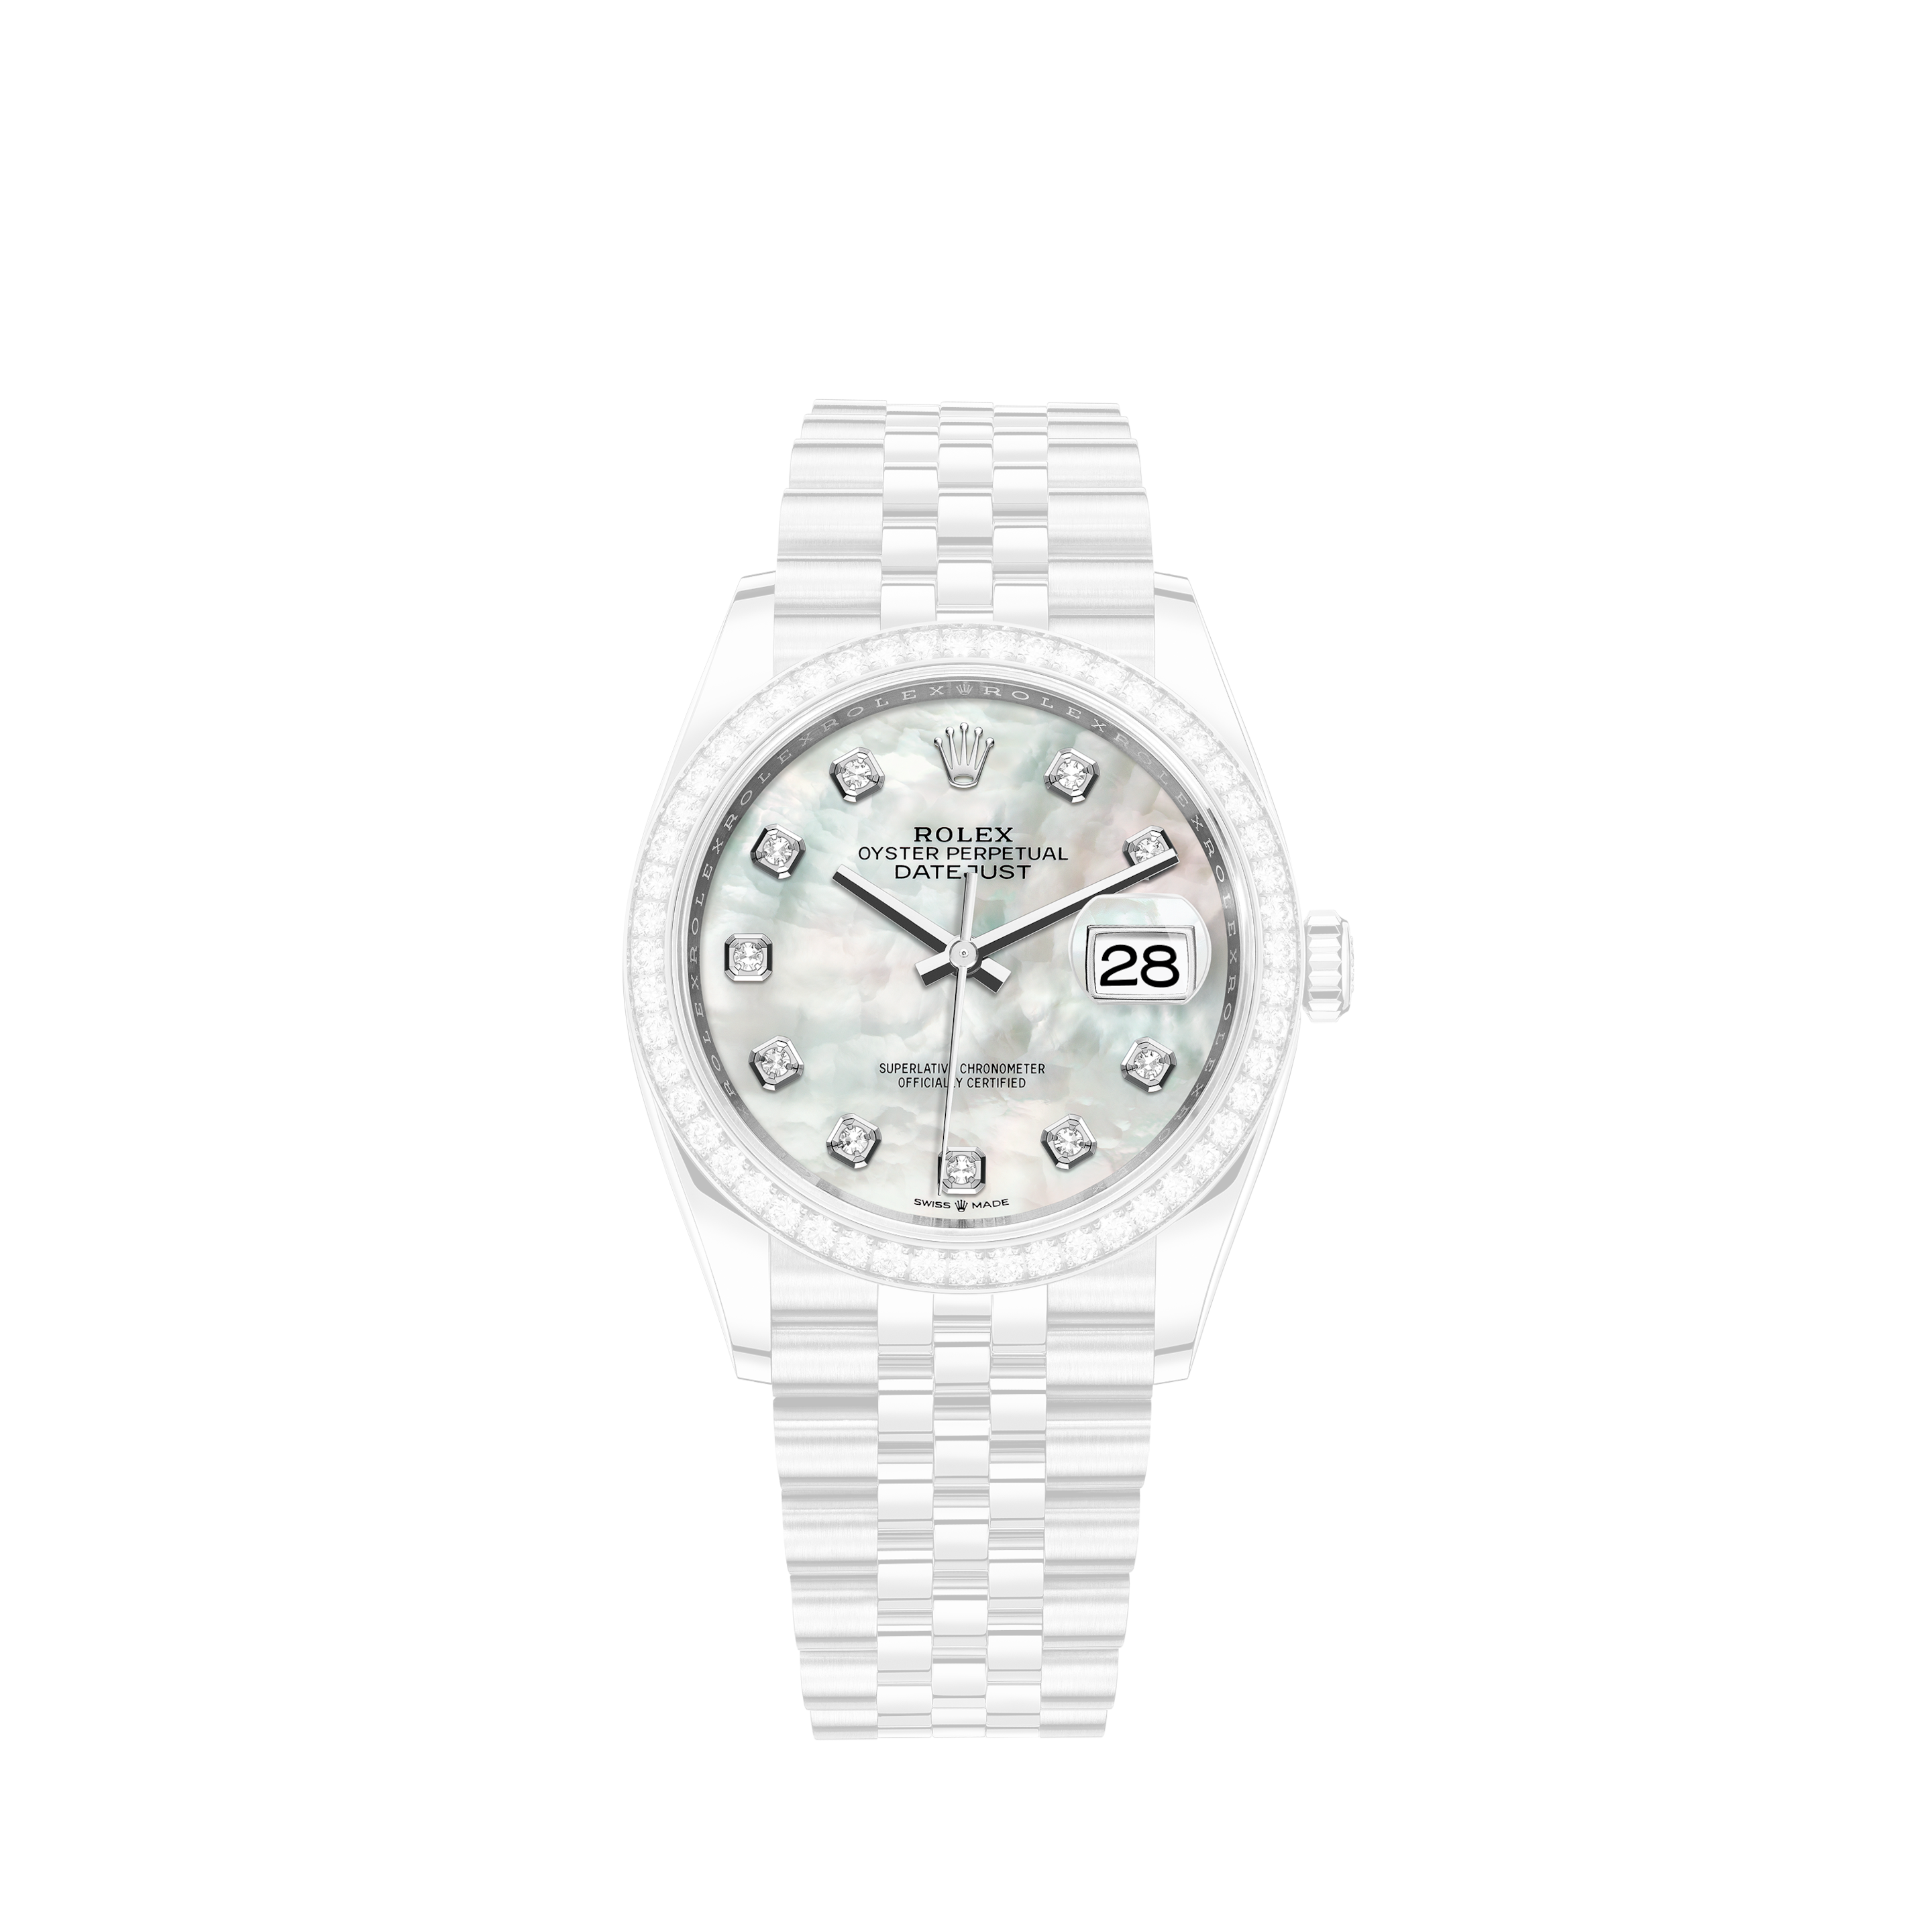 Rolex Datejust 2-Tone 36mm 1.4ct Diamond Bezel/Lugs/Sangria Dial Jubilee Watch